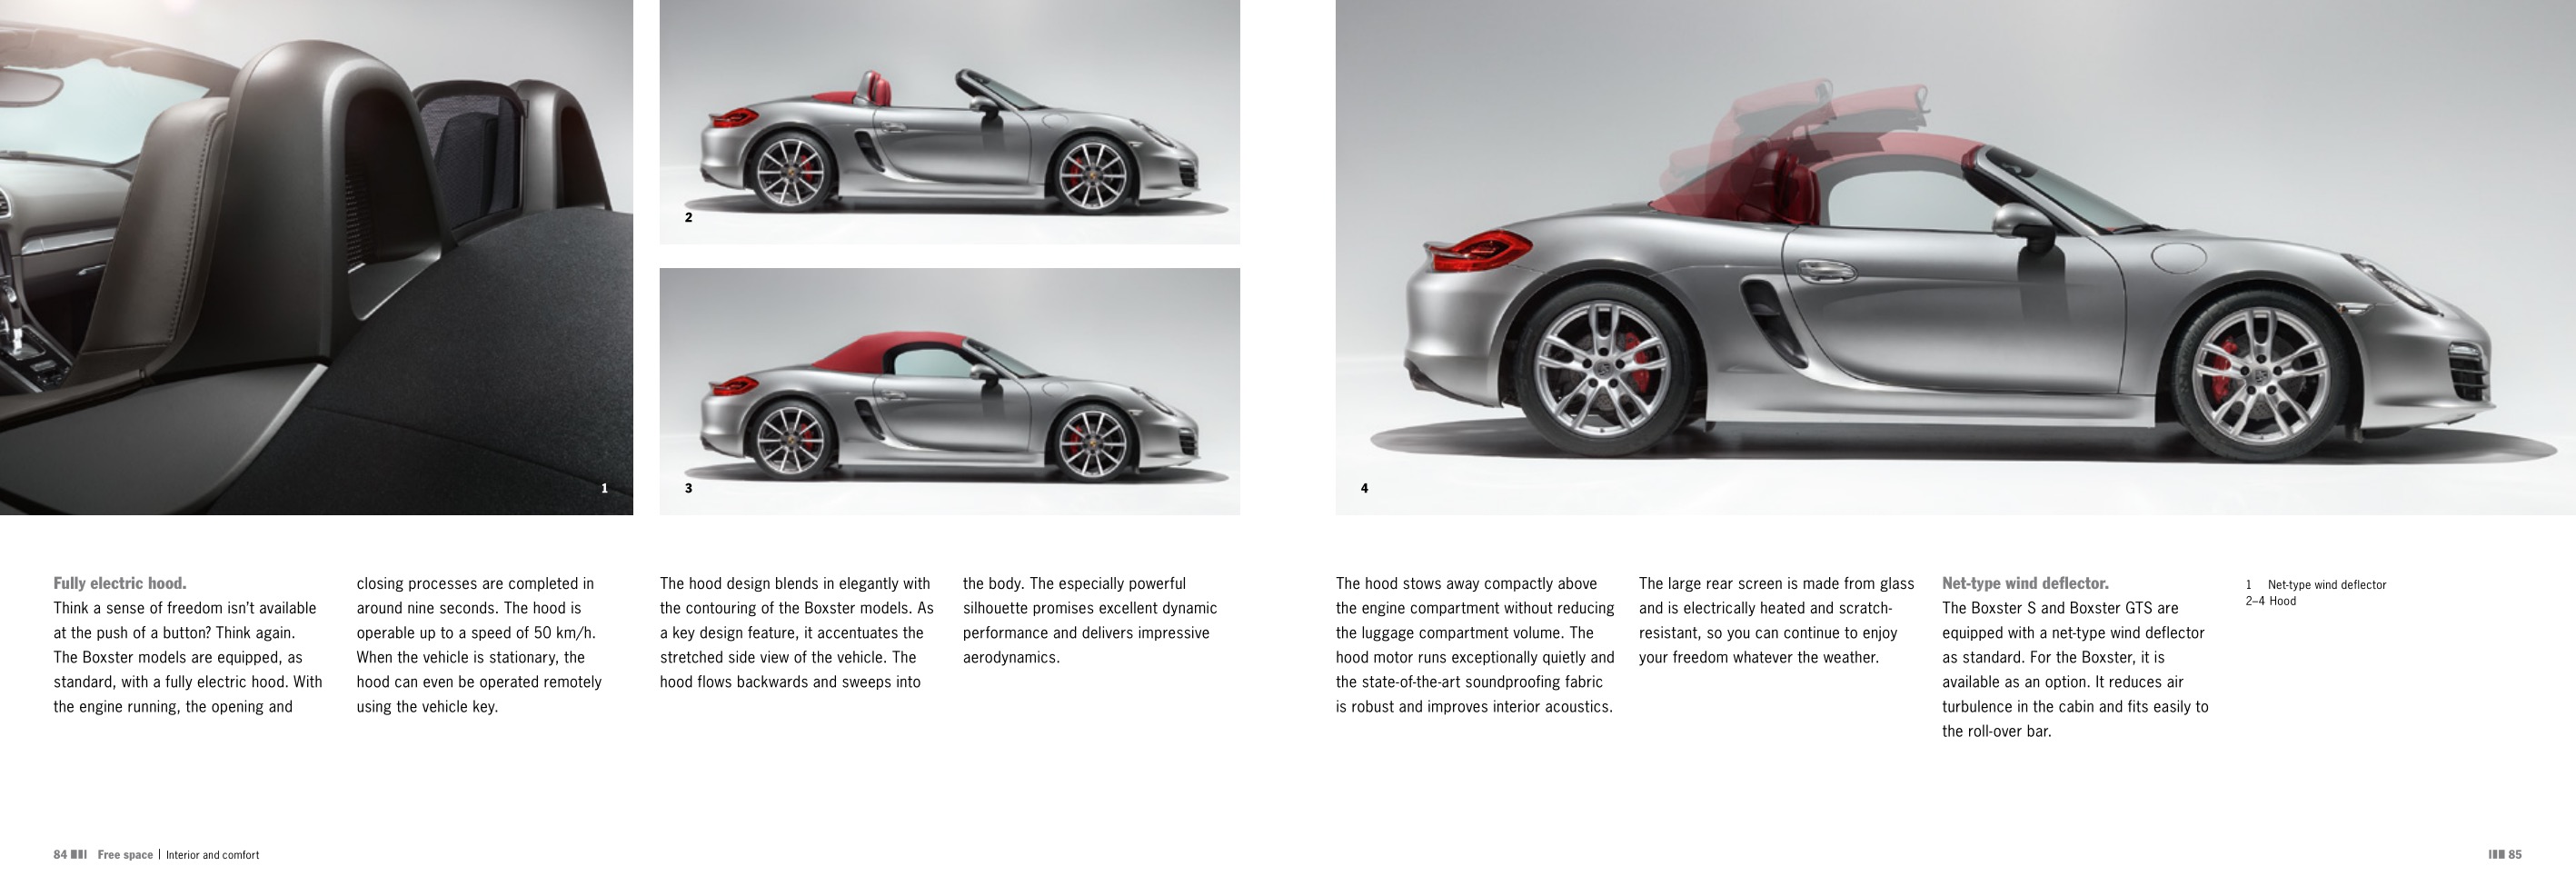 2015 Porsche Boxster Brochure Page 13